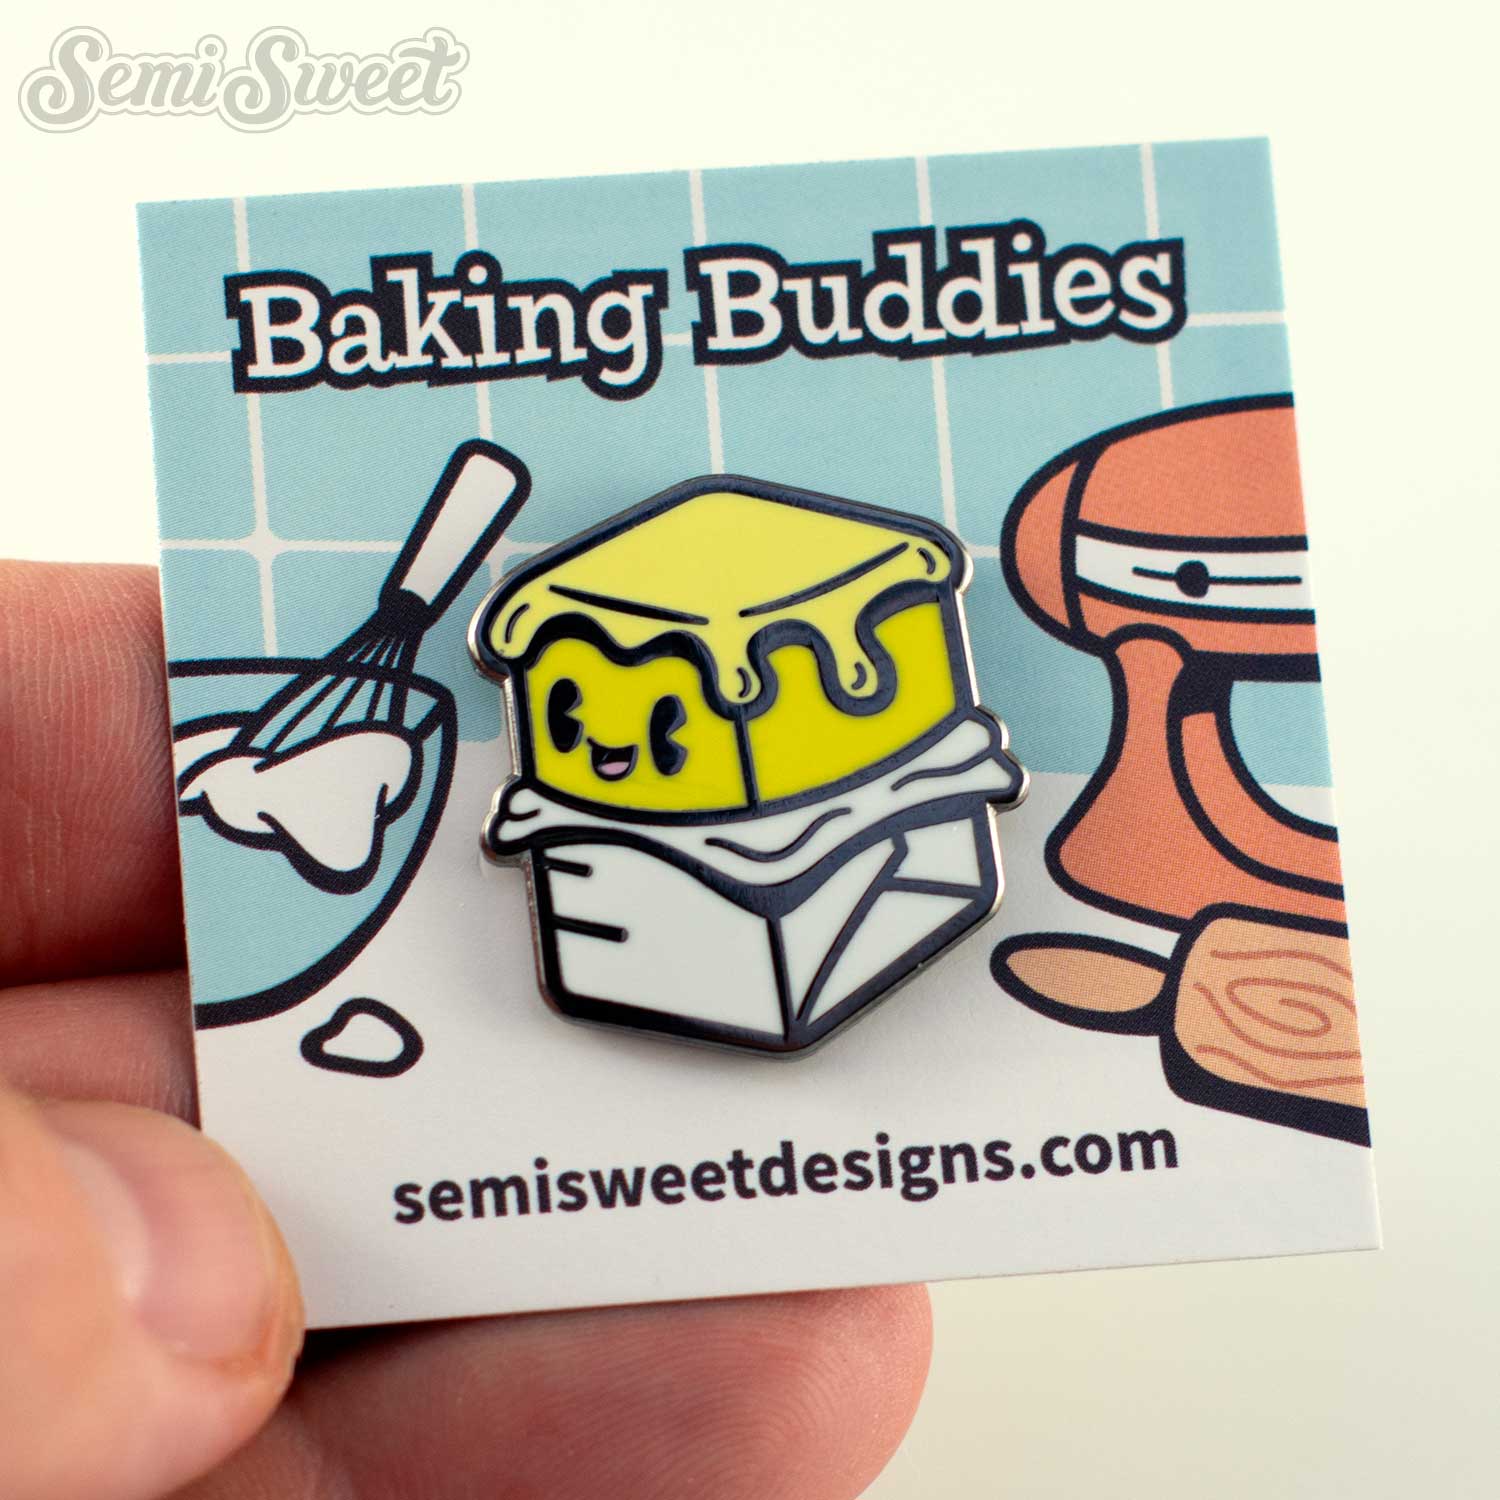 baking buddies butter enamel pins